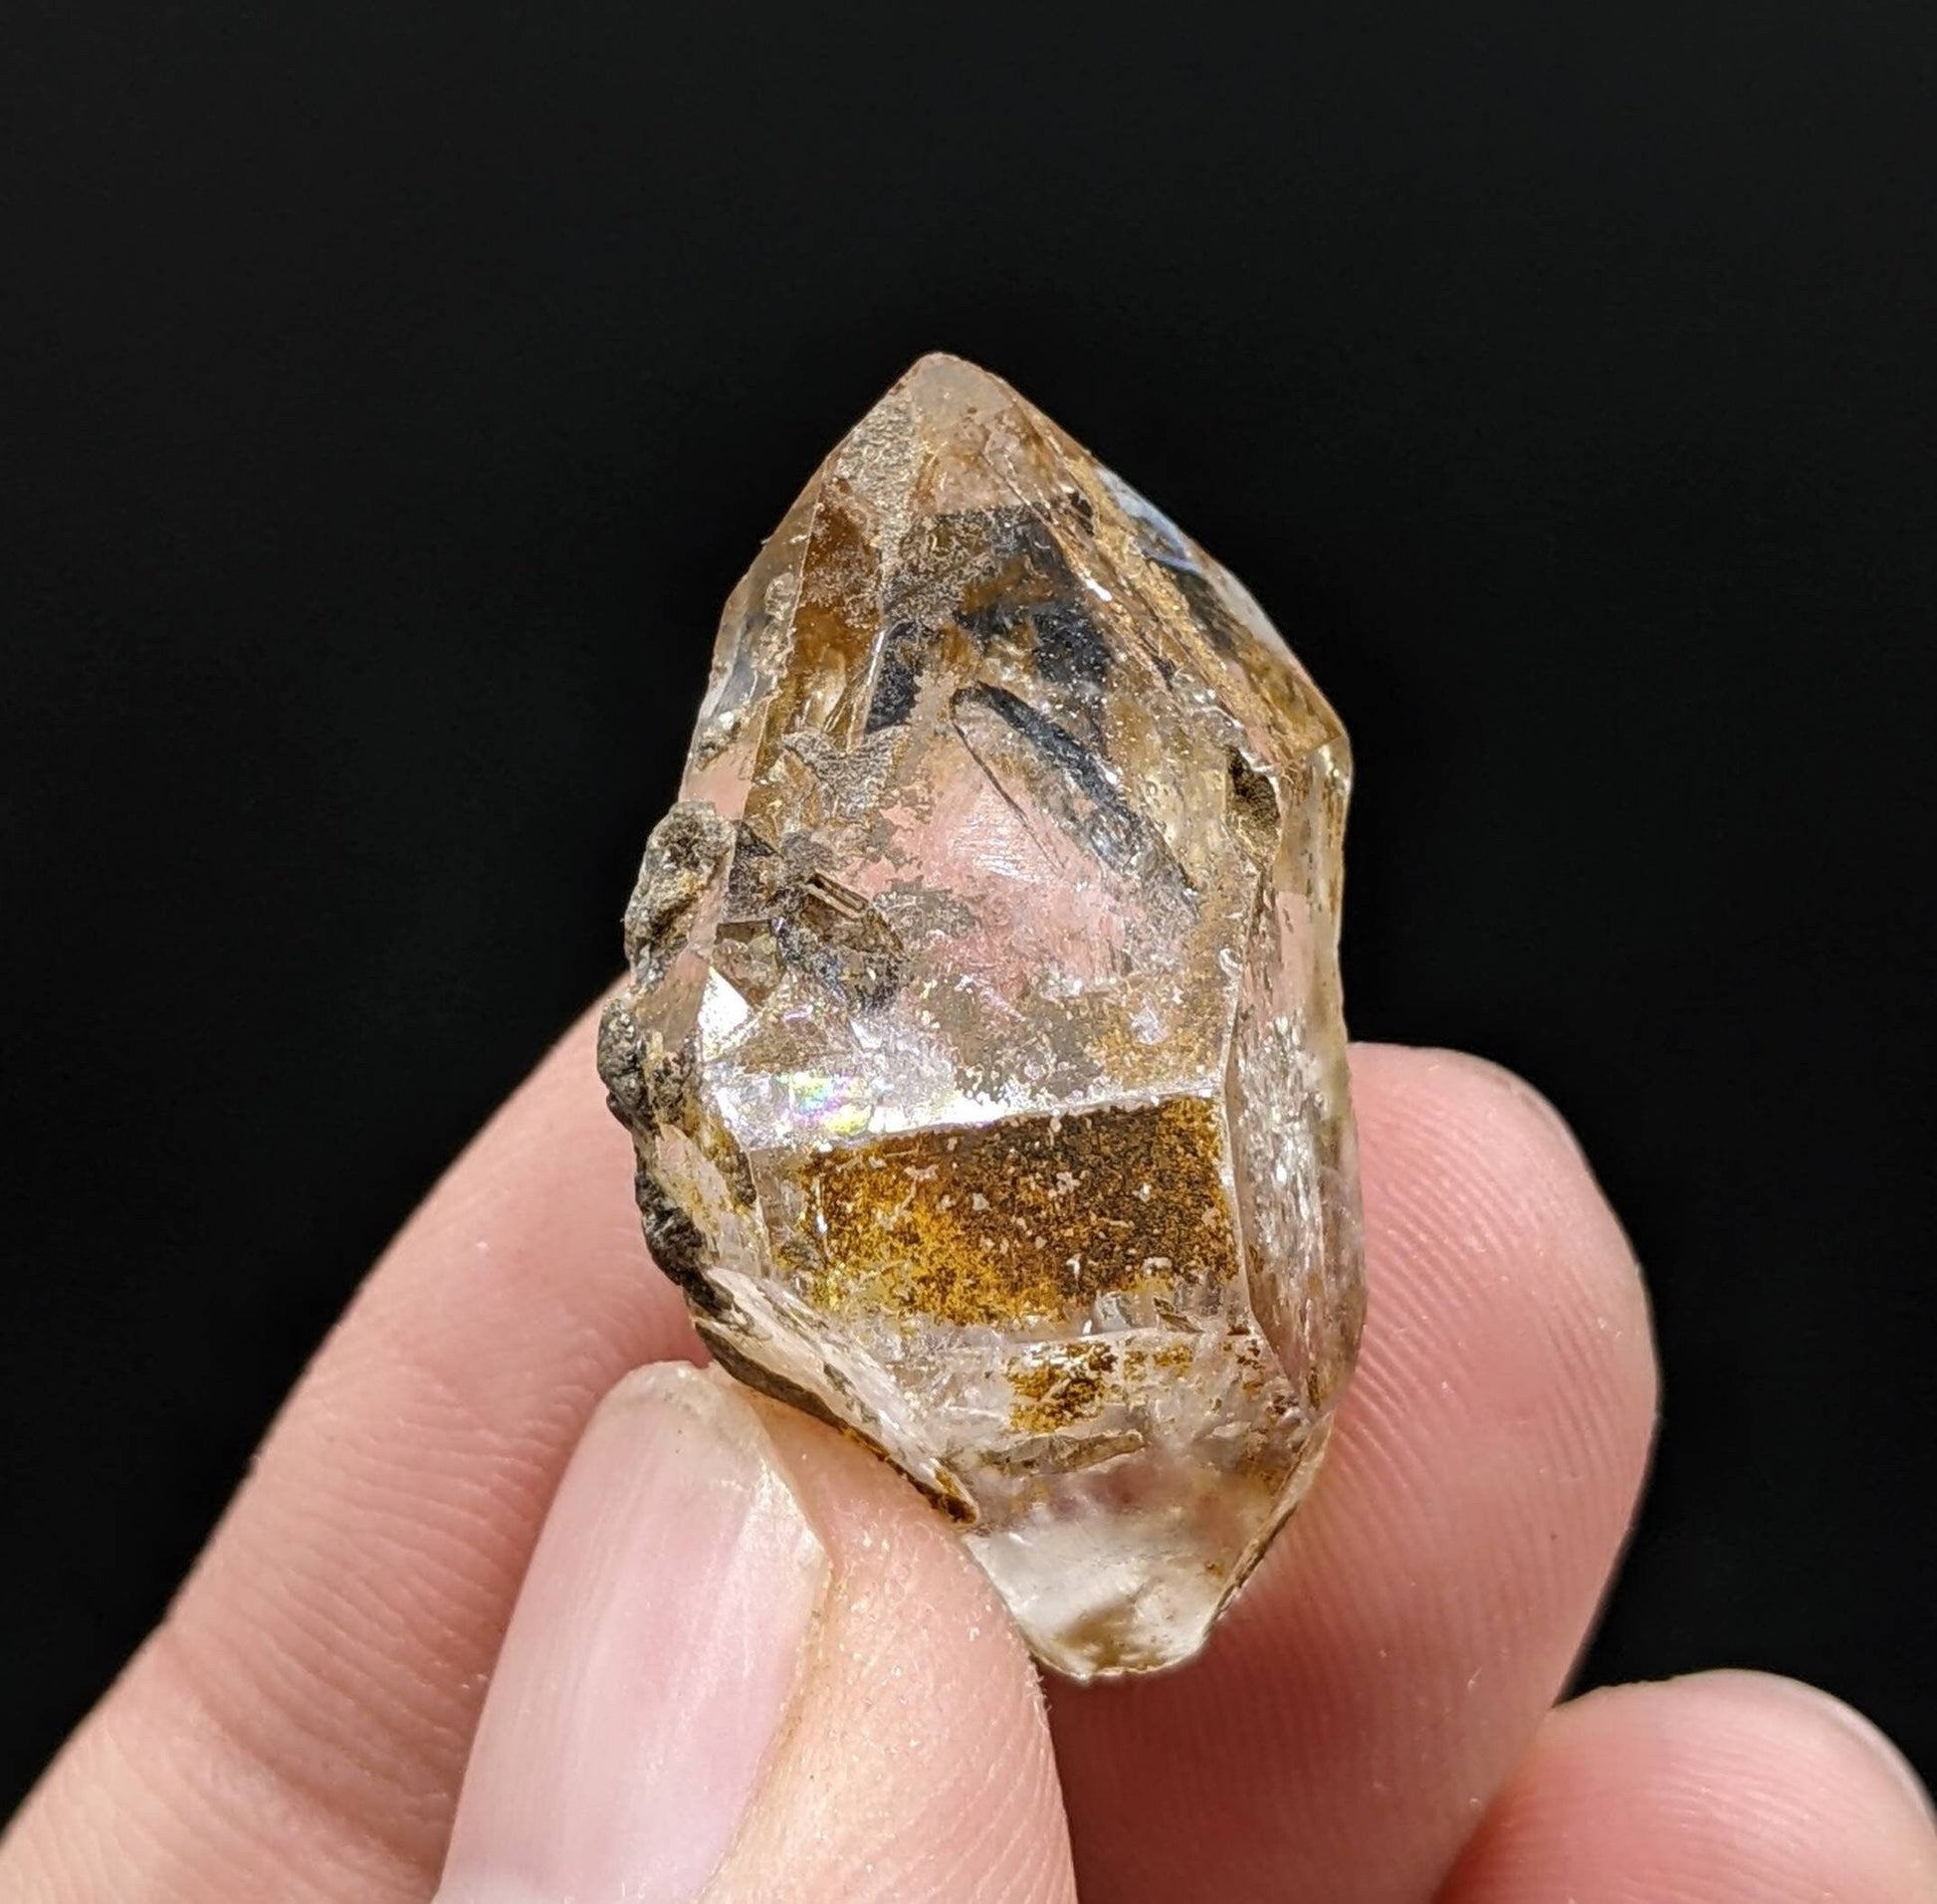 ARSAA GEMS AND MINERALSSmall window quartz crystal from Baluchistan Pakistan, 8.5 grams - Premium  from ARSAA GEMS AND MINERALS - Just $15.00! Shop now at ARSAA GEMS AND MINERALS